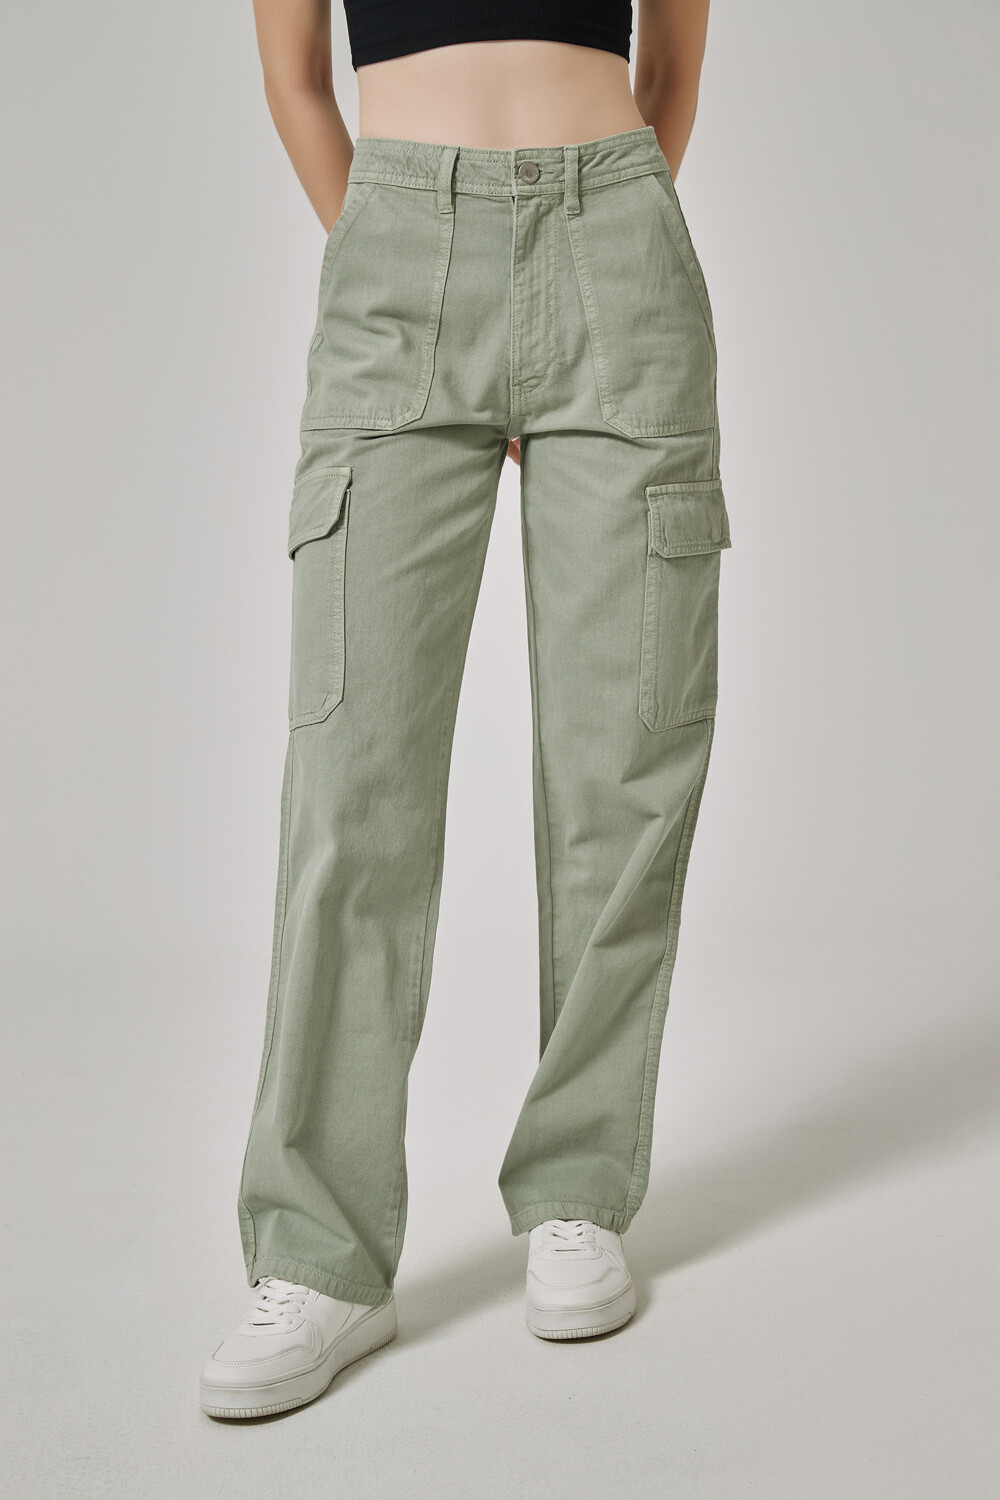 Pantalon Troyano Verde Grisaceo